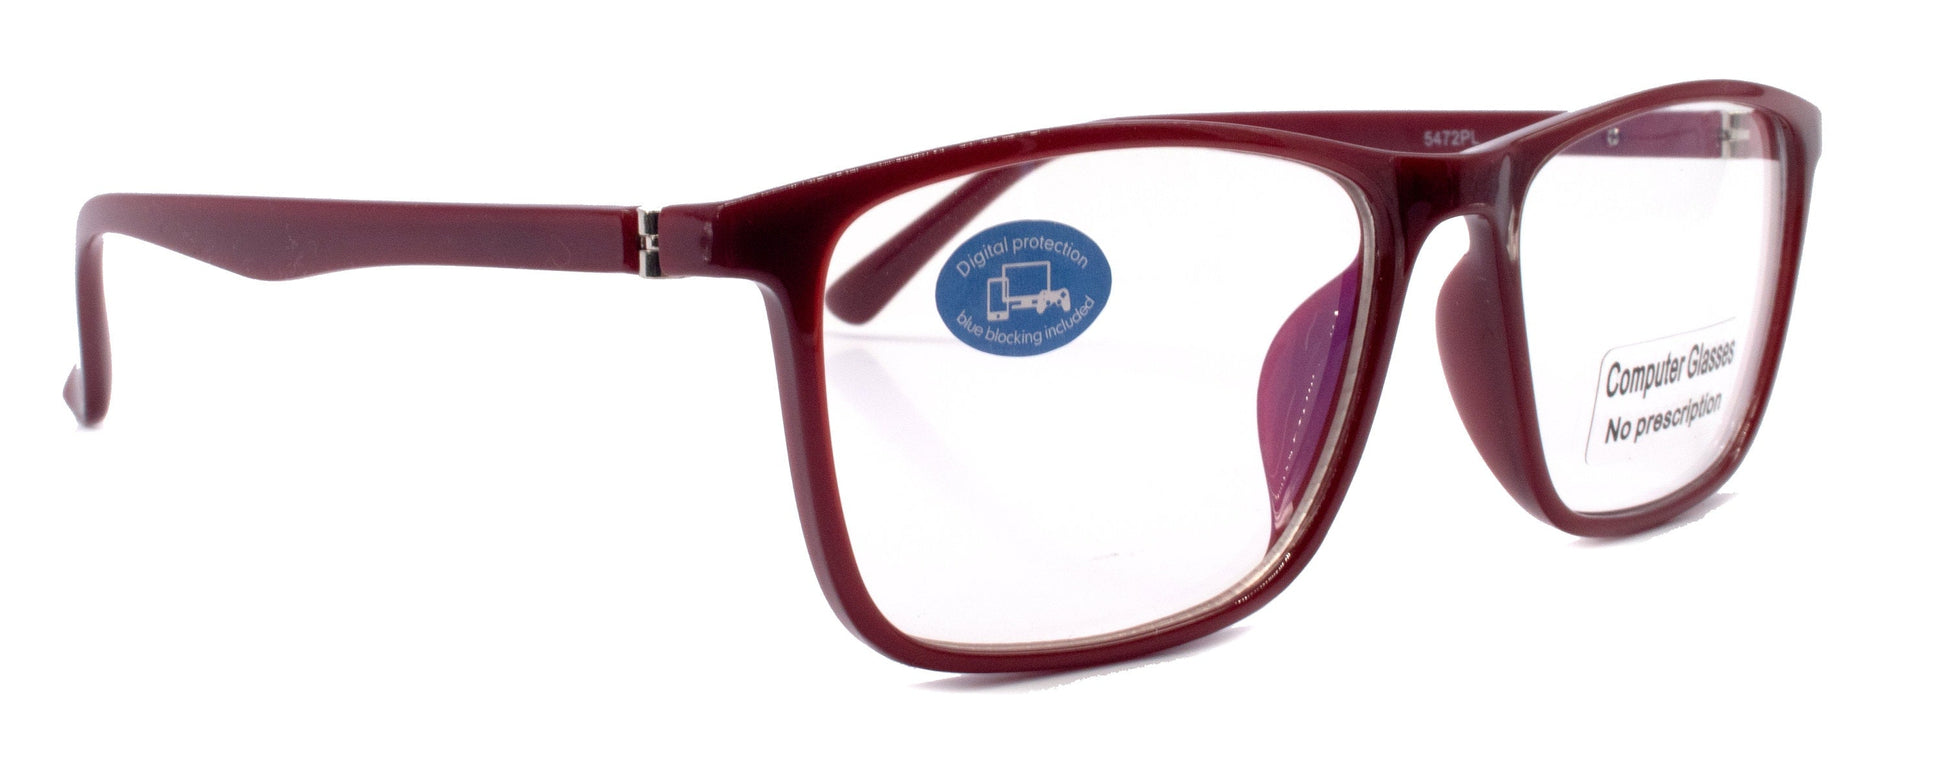 Vista, (Blue Light Glasses) w AR Coating (Anti Glare) Filter, (Burgundy, Square) Reading Glasses, No prescription, Gamers NY Fifth Avenue 